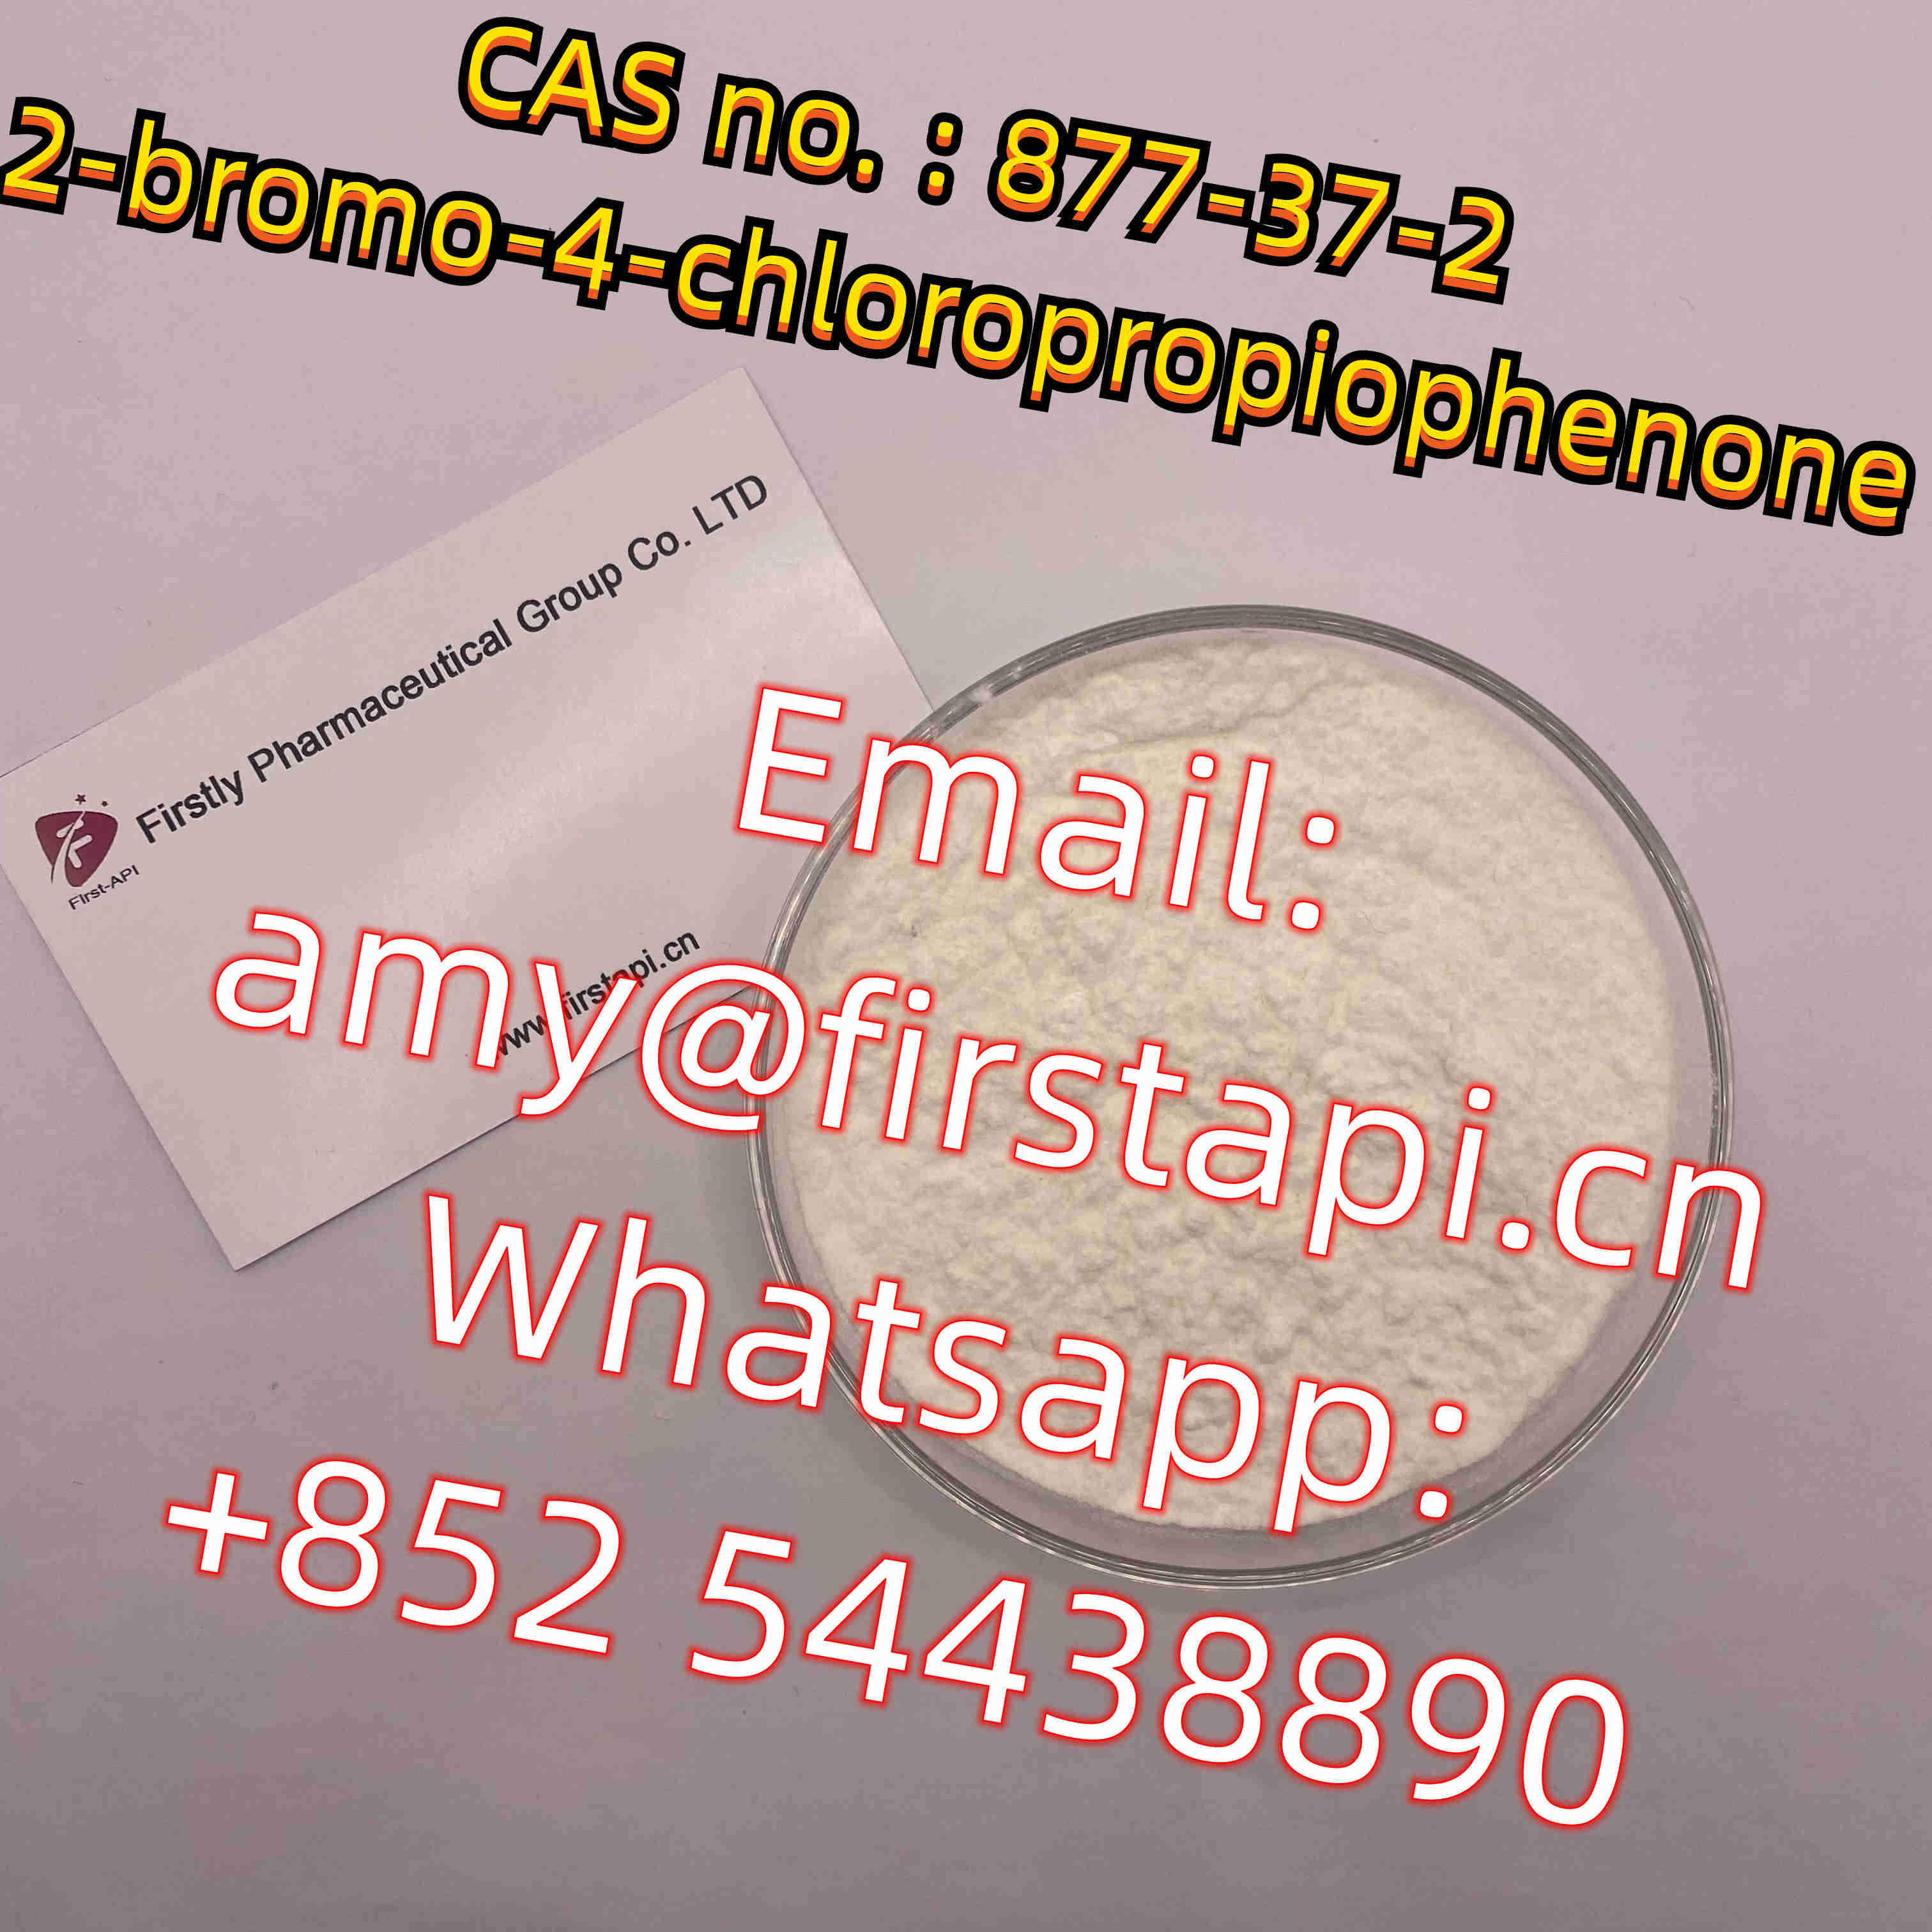 Chemical Name:2-bromo-4-chloropropiophenone   CAS No.:877-37-2    Whatsapp:+852 54438890 - photo